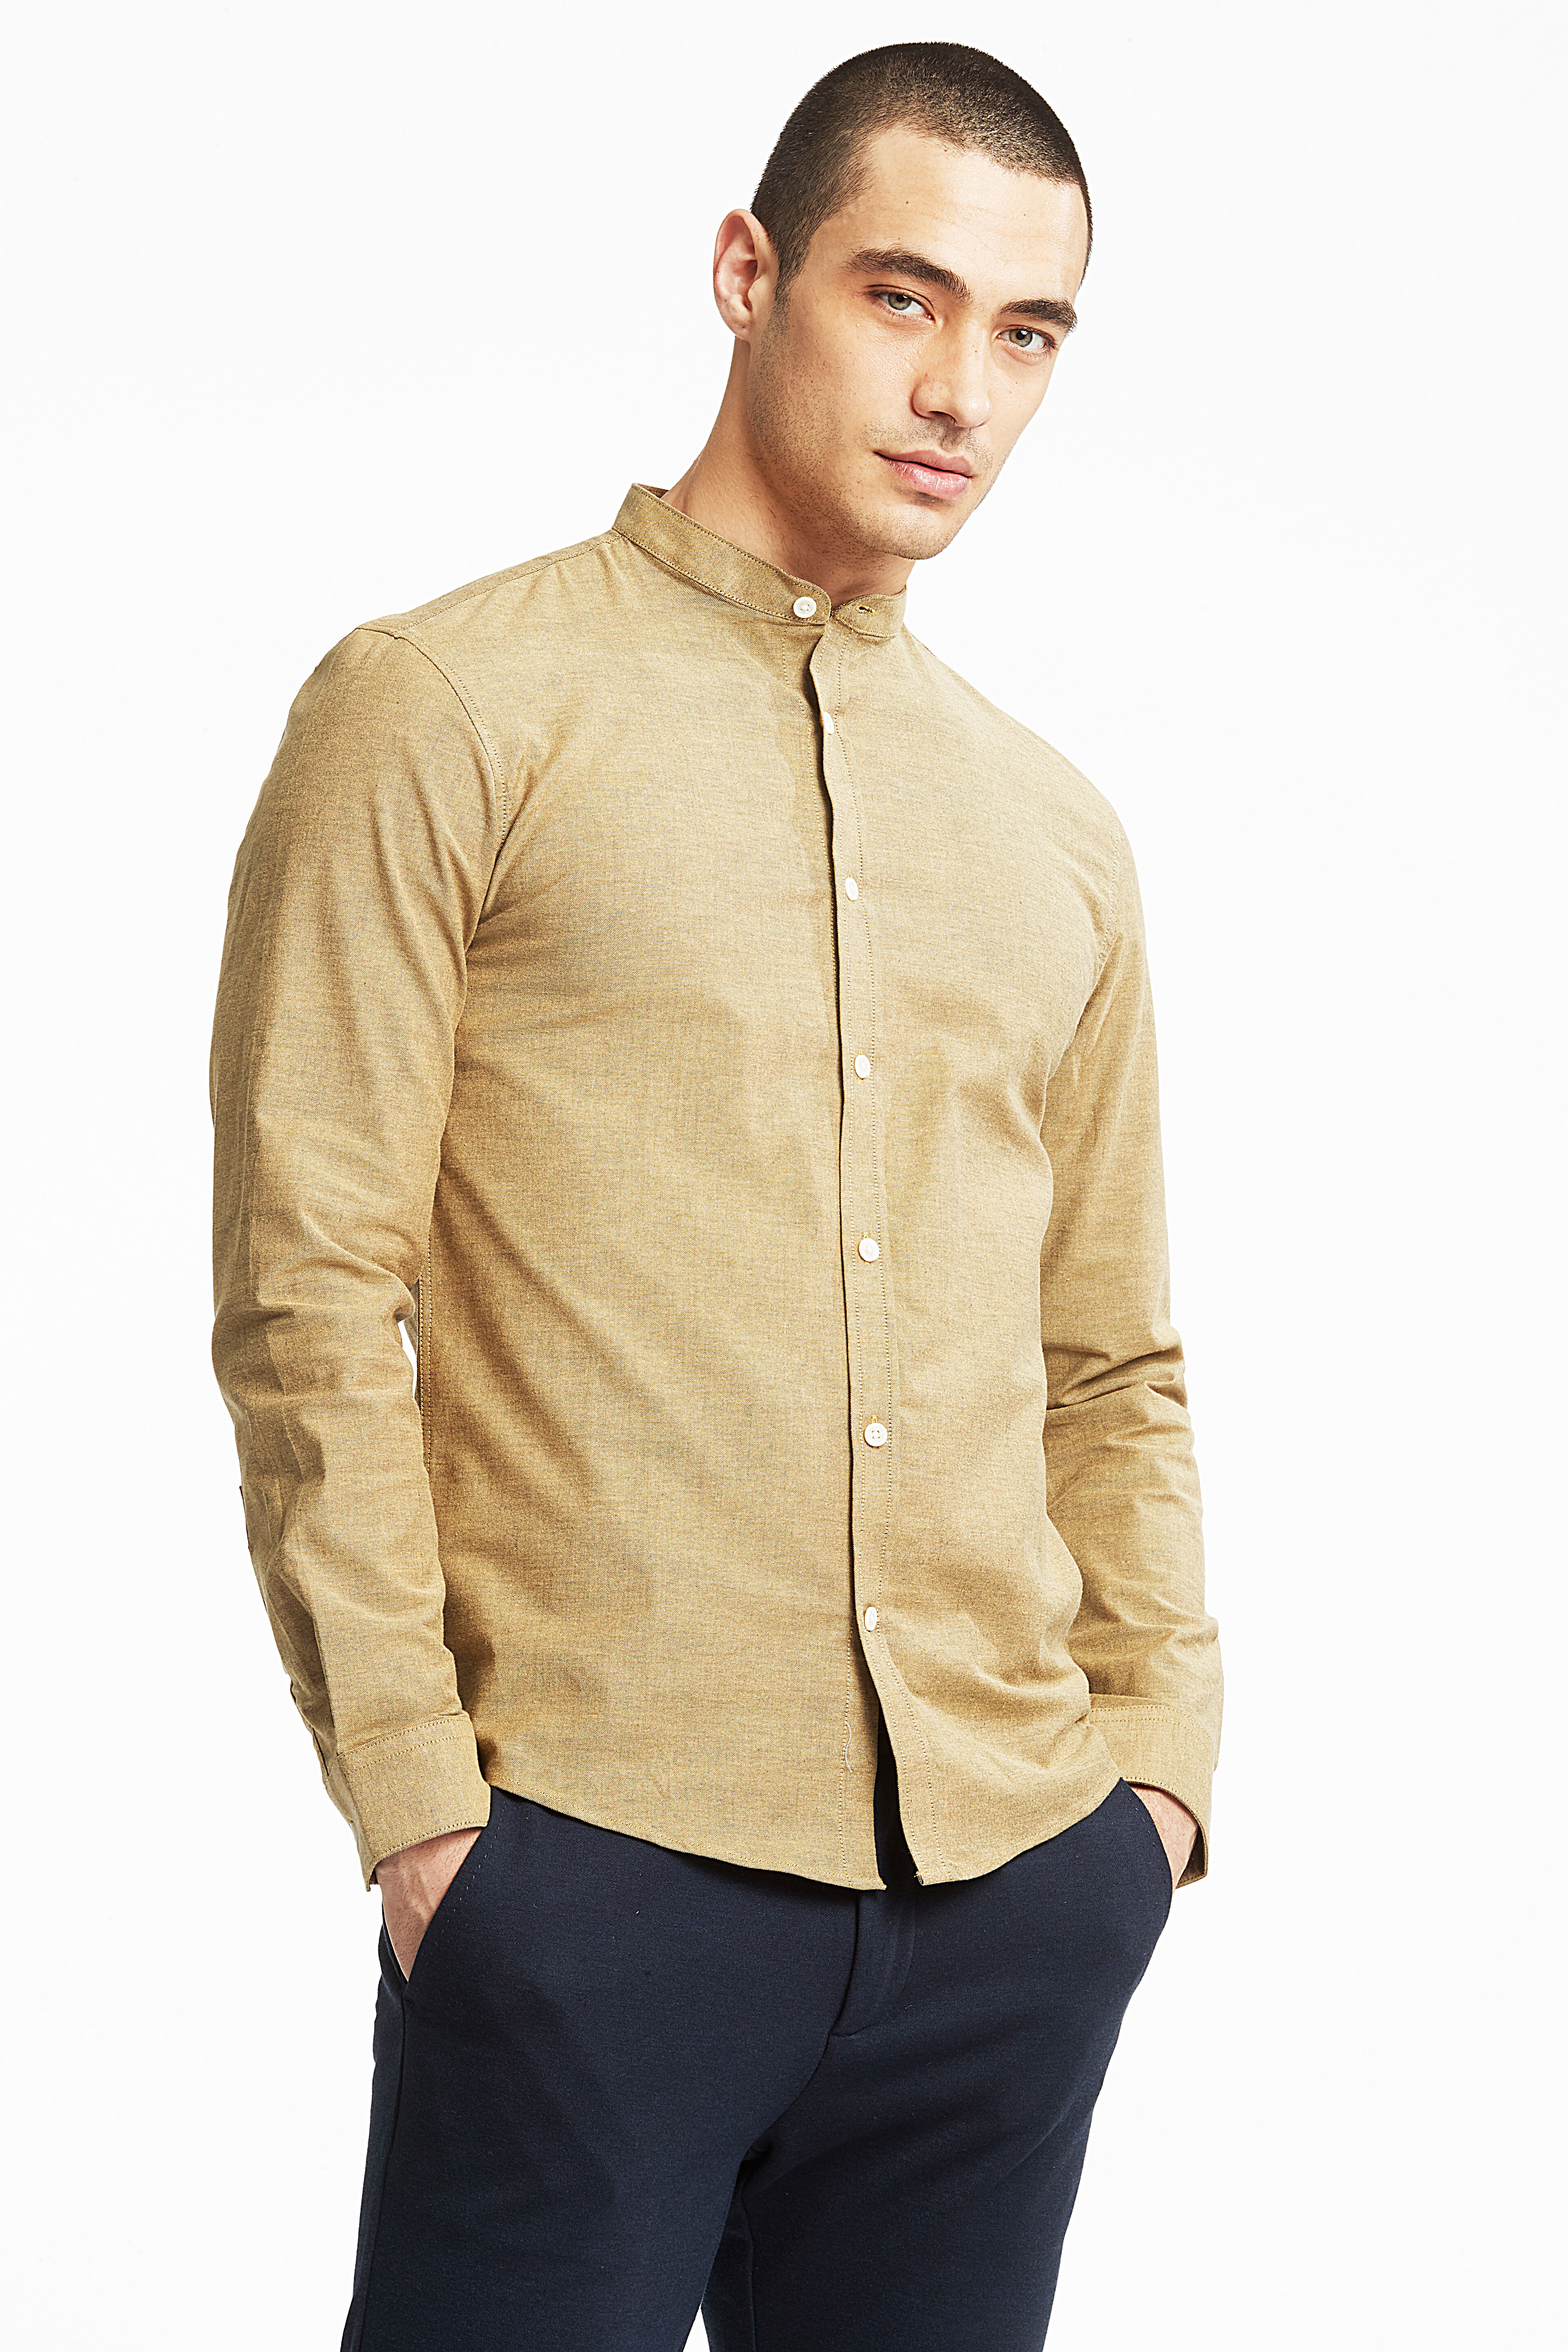 Oxford shirt | Slim fit